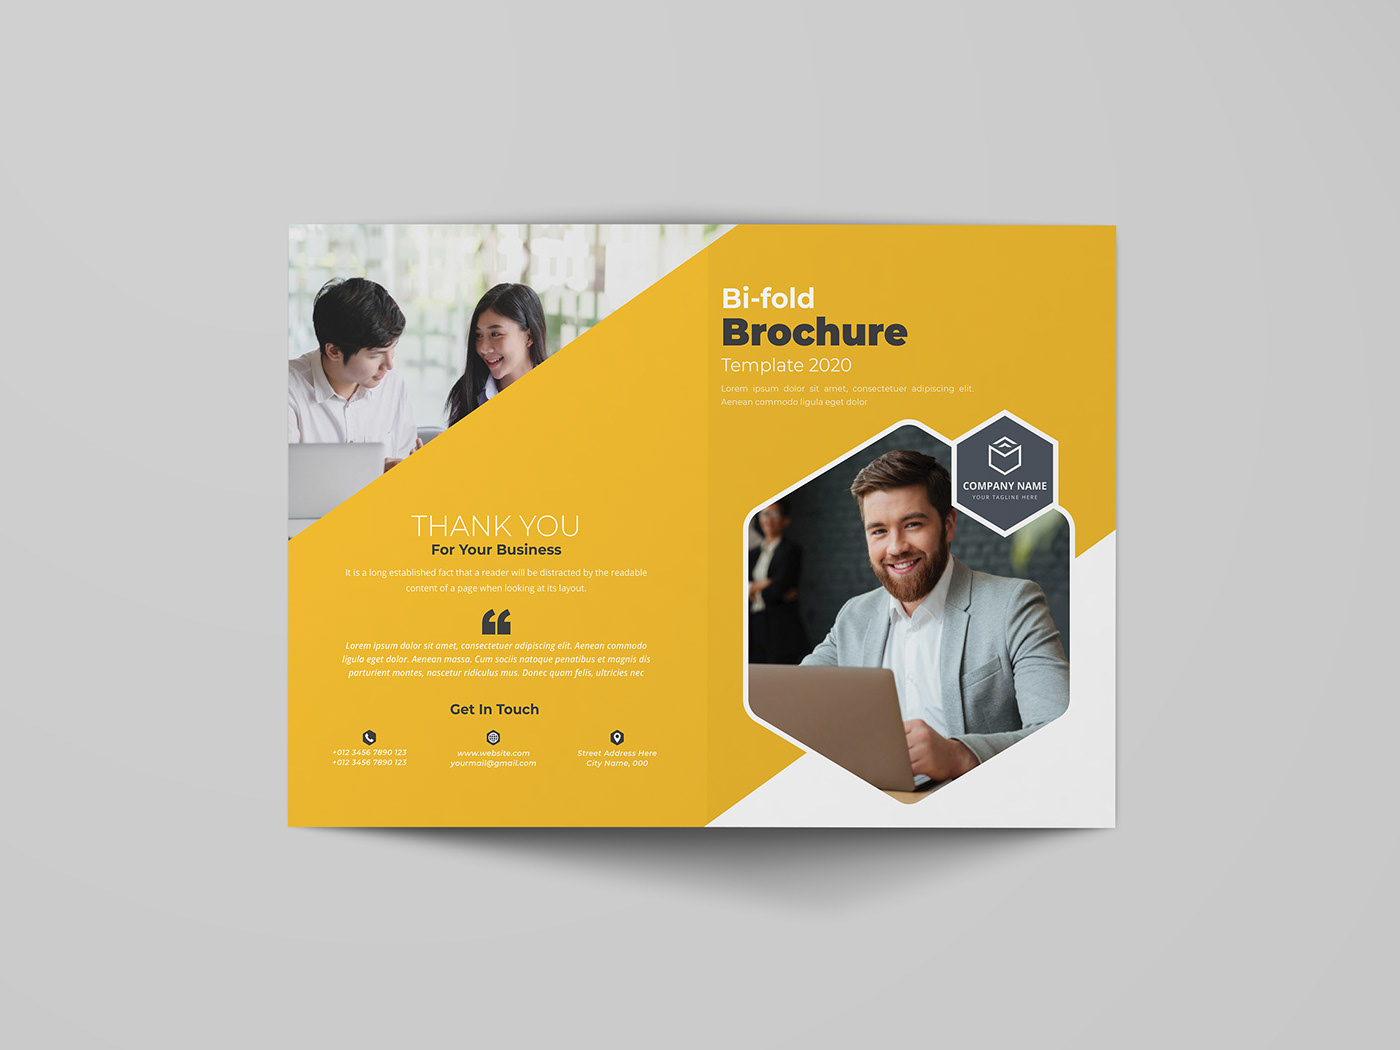 Bi-fold Brochure Design Template  Freebie  on Behance Within Adobe Illustrator Brochure Templates Free Download